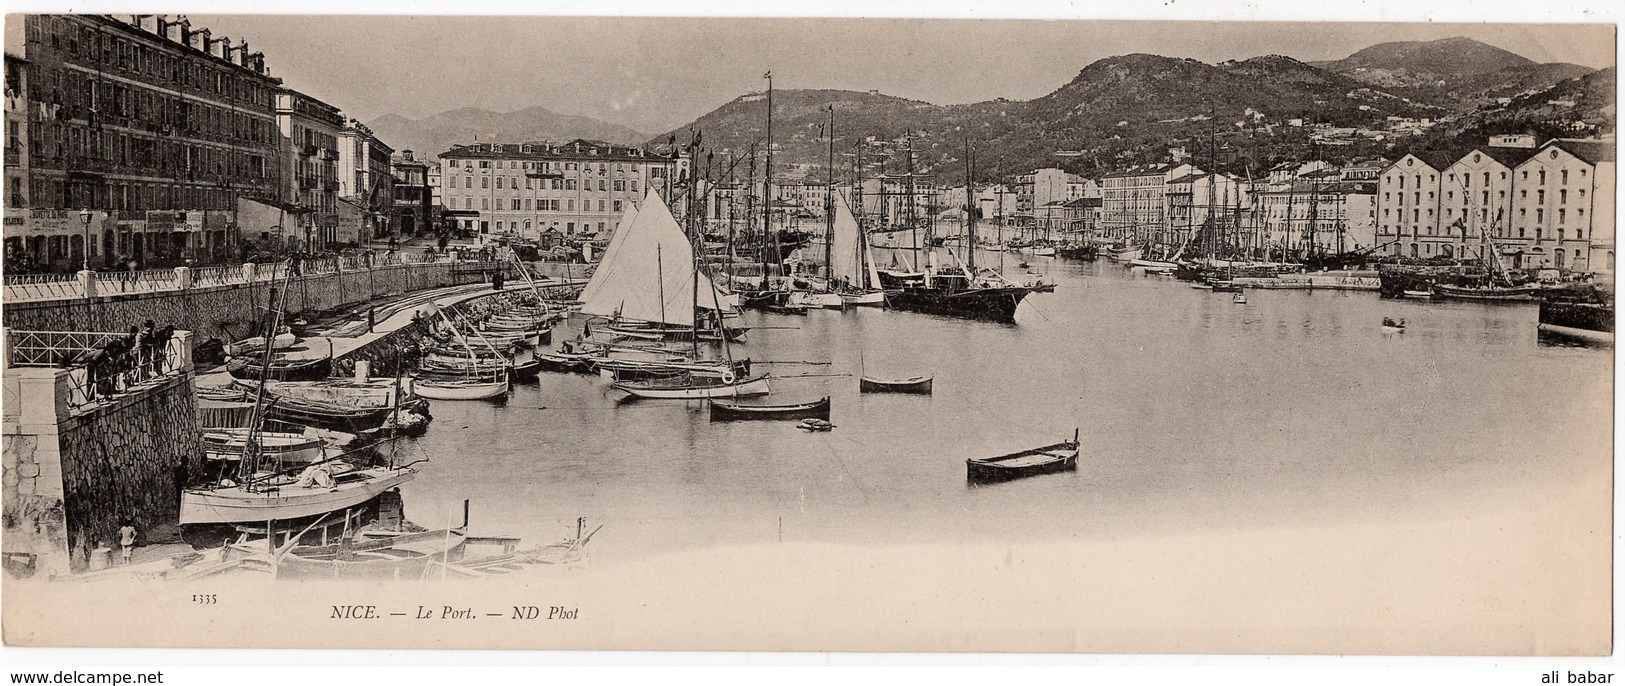 Nice : Carte Panoramique Double Format : Le Port (Edit. ND Phot. N°1335) - Transport Maritime - Port